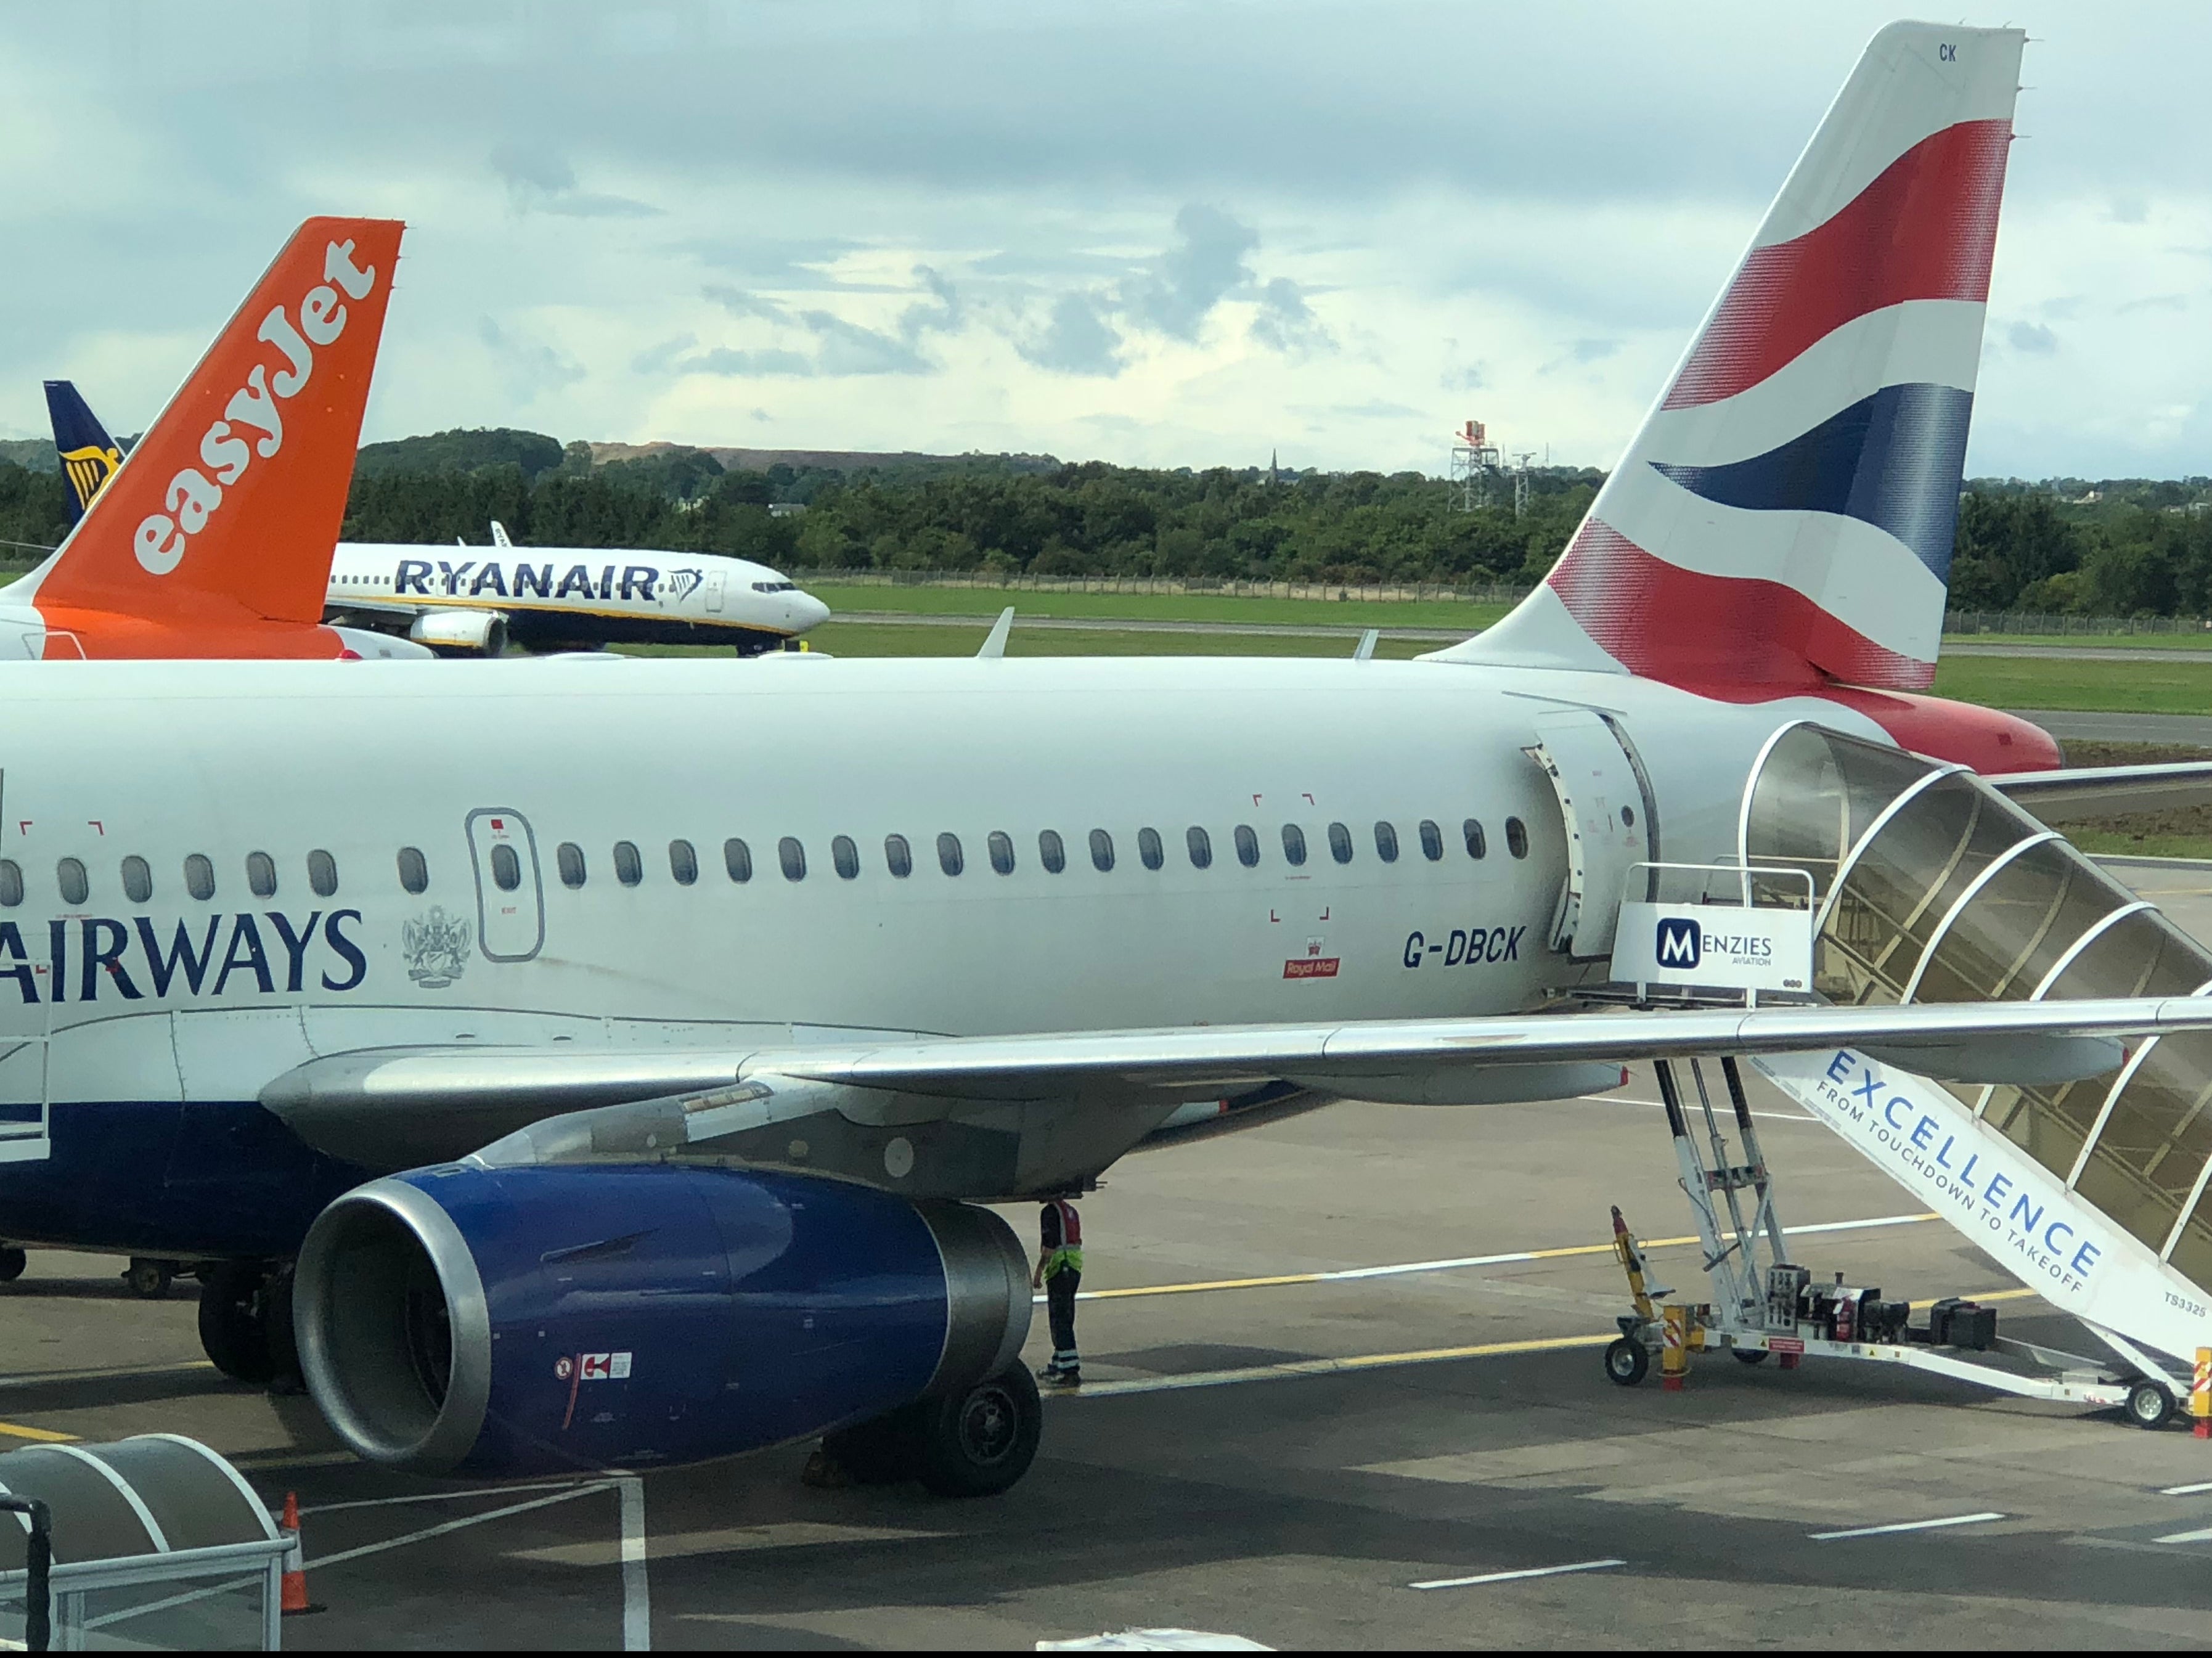 Opening up: easyJet, Ryanair and British Airways aircraft at Edinburgh airport